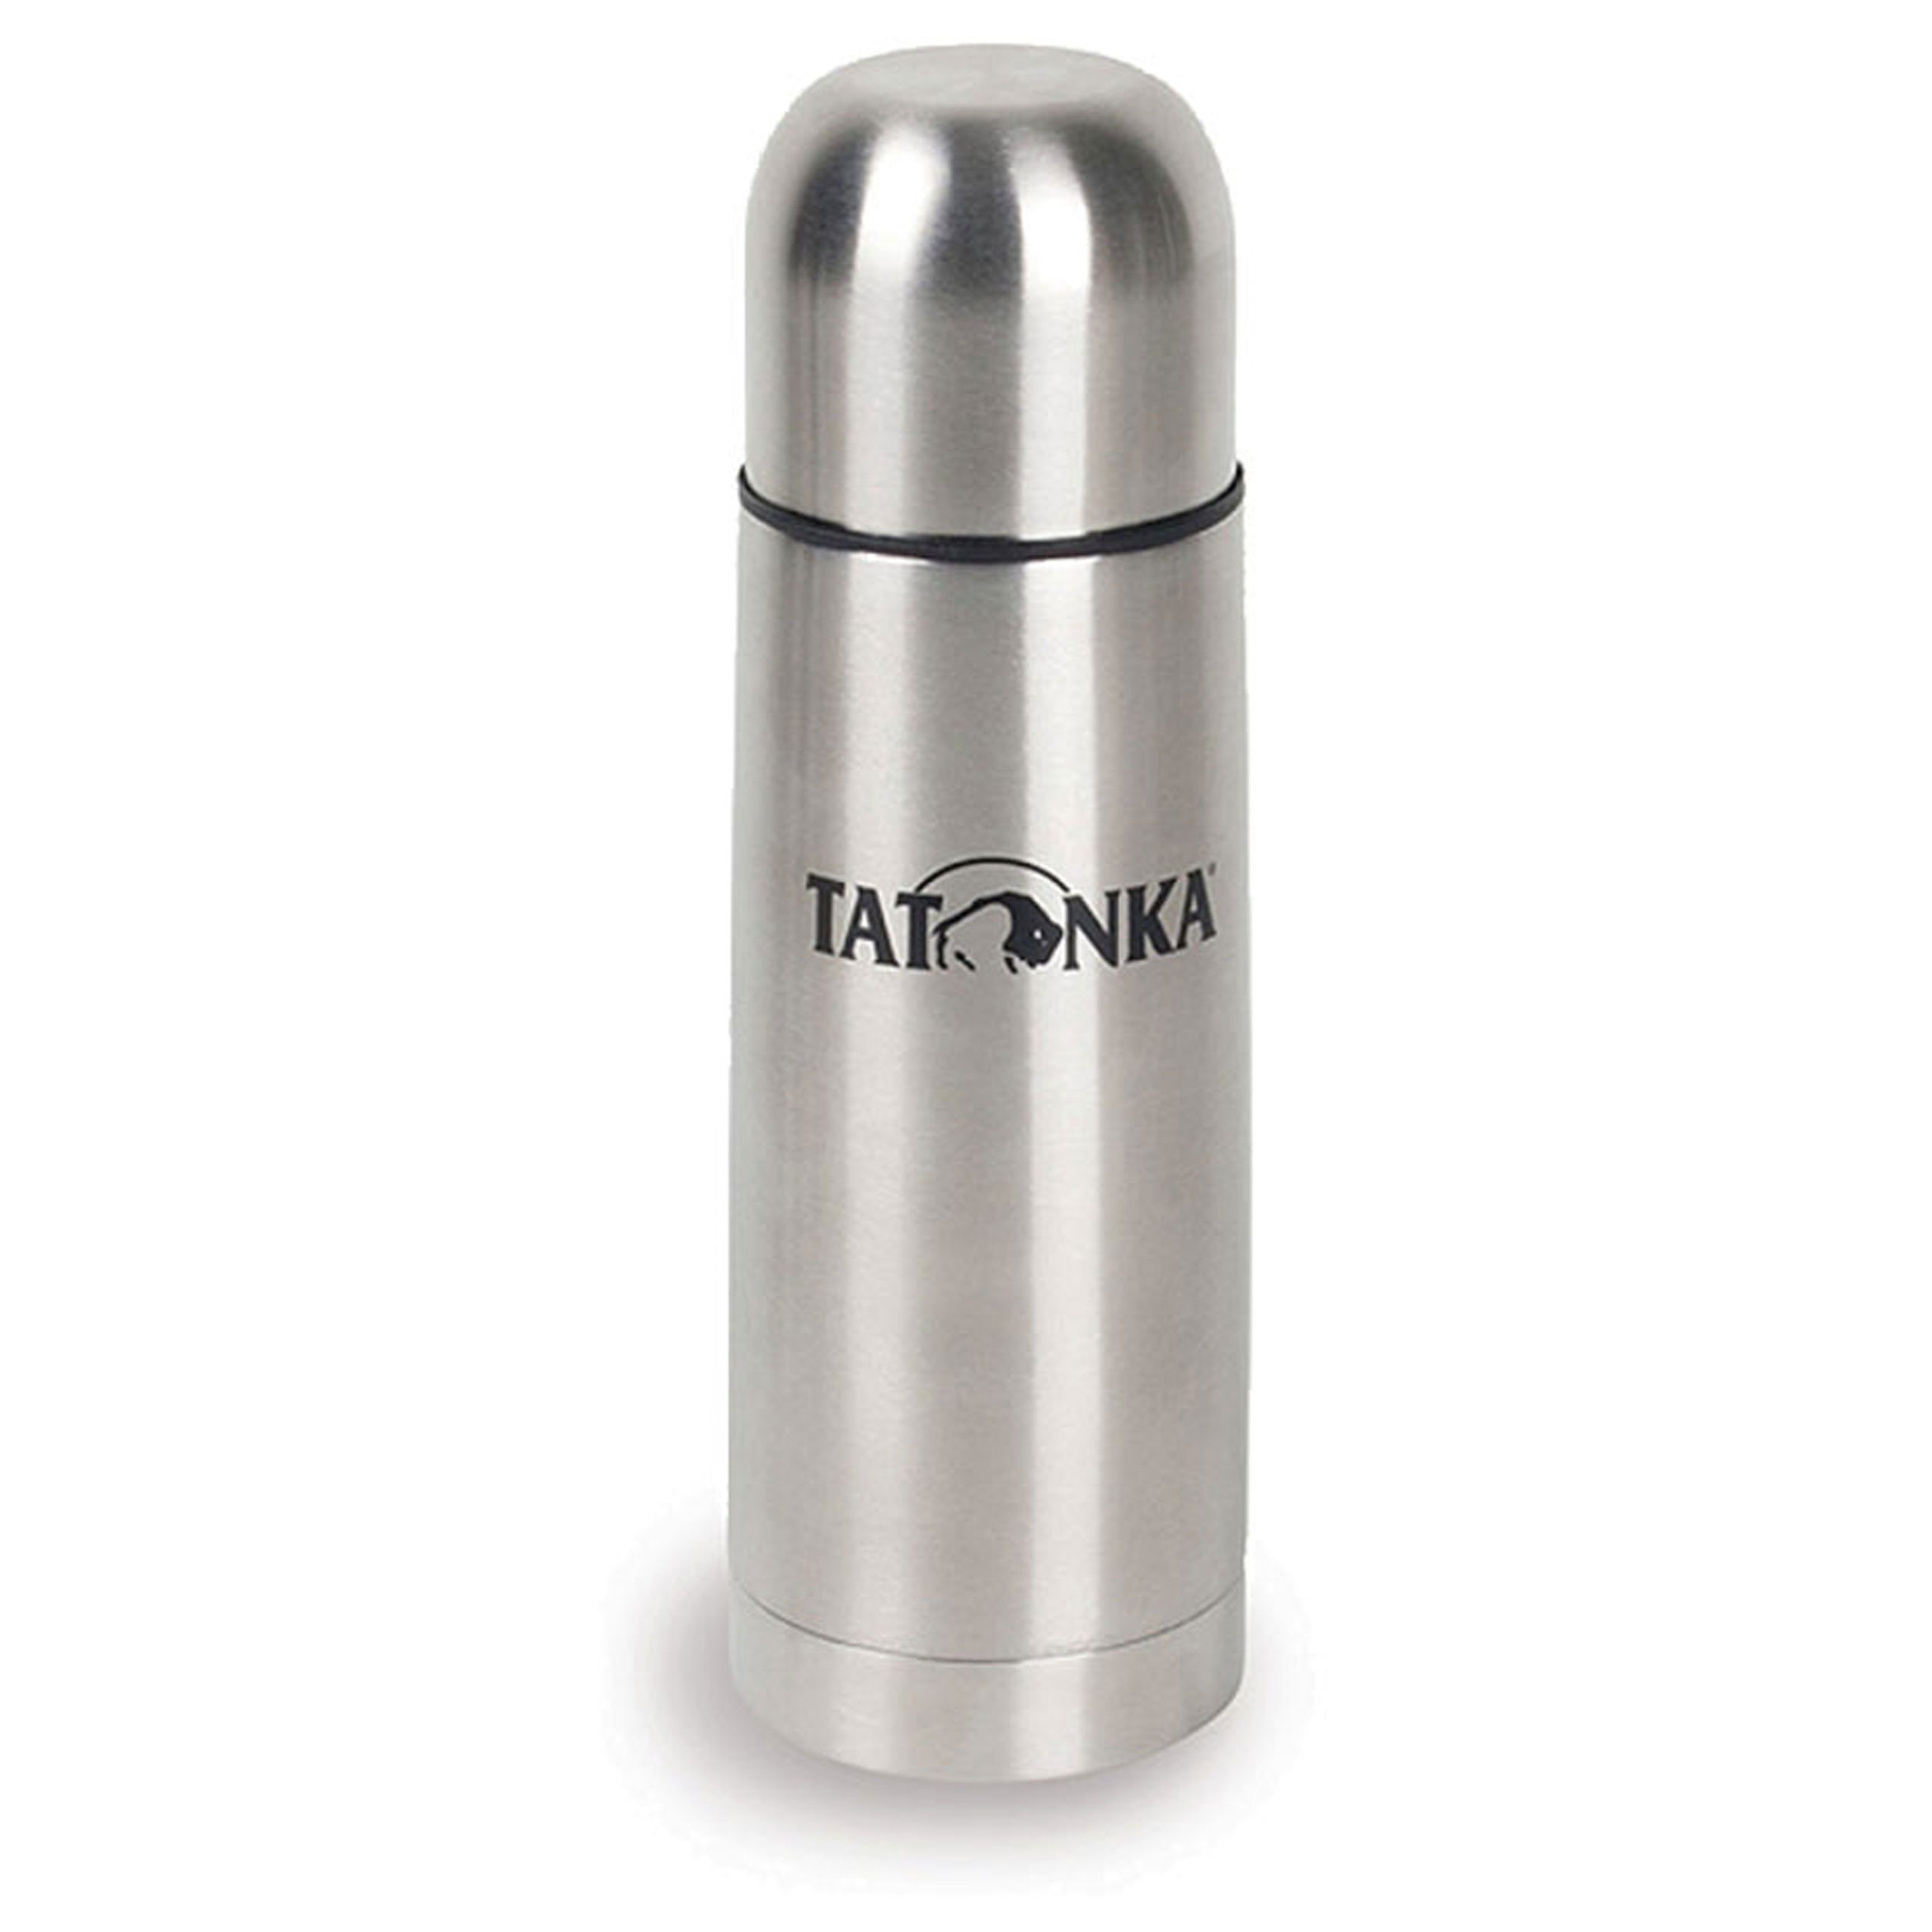 TATONKA® Isolierflasche Tatonka Hot & Cold Stuff - Isolierflasche/Thermoflasche